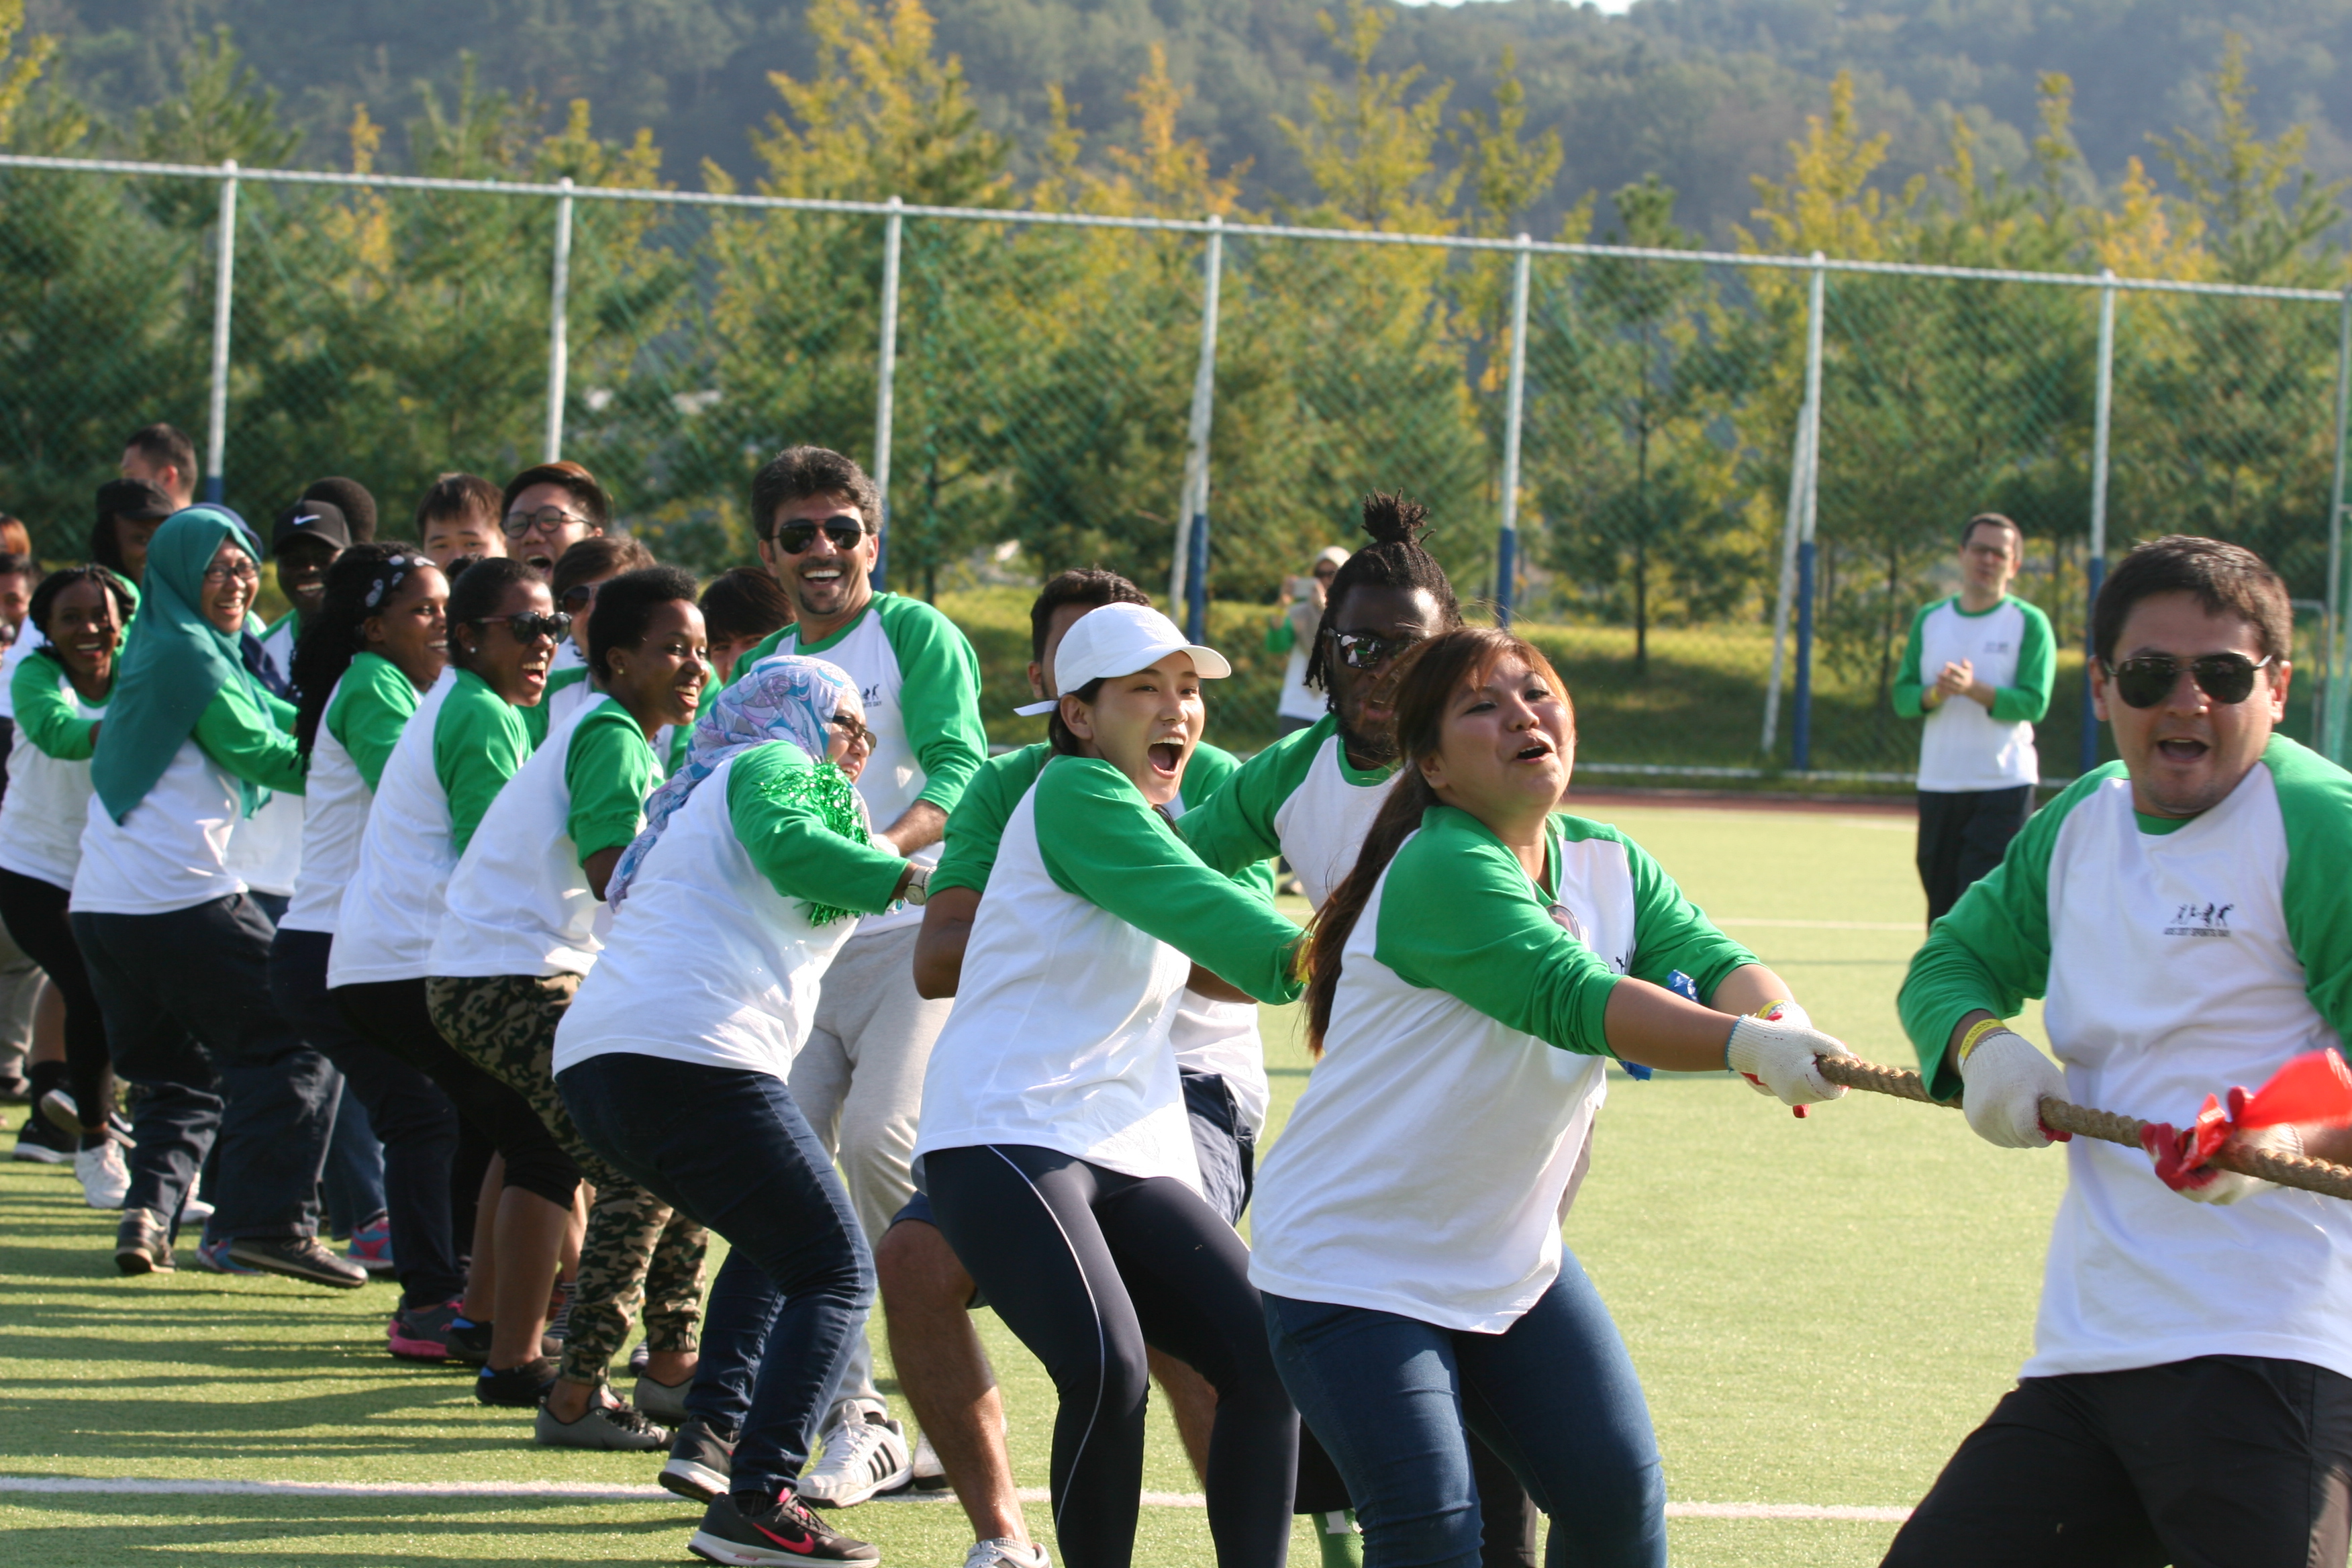 Sports day: KDI School gets athletic